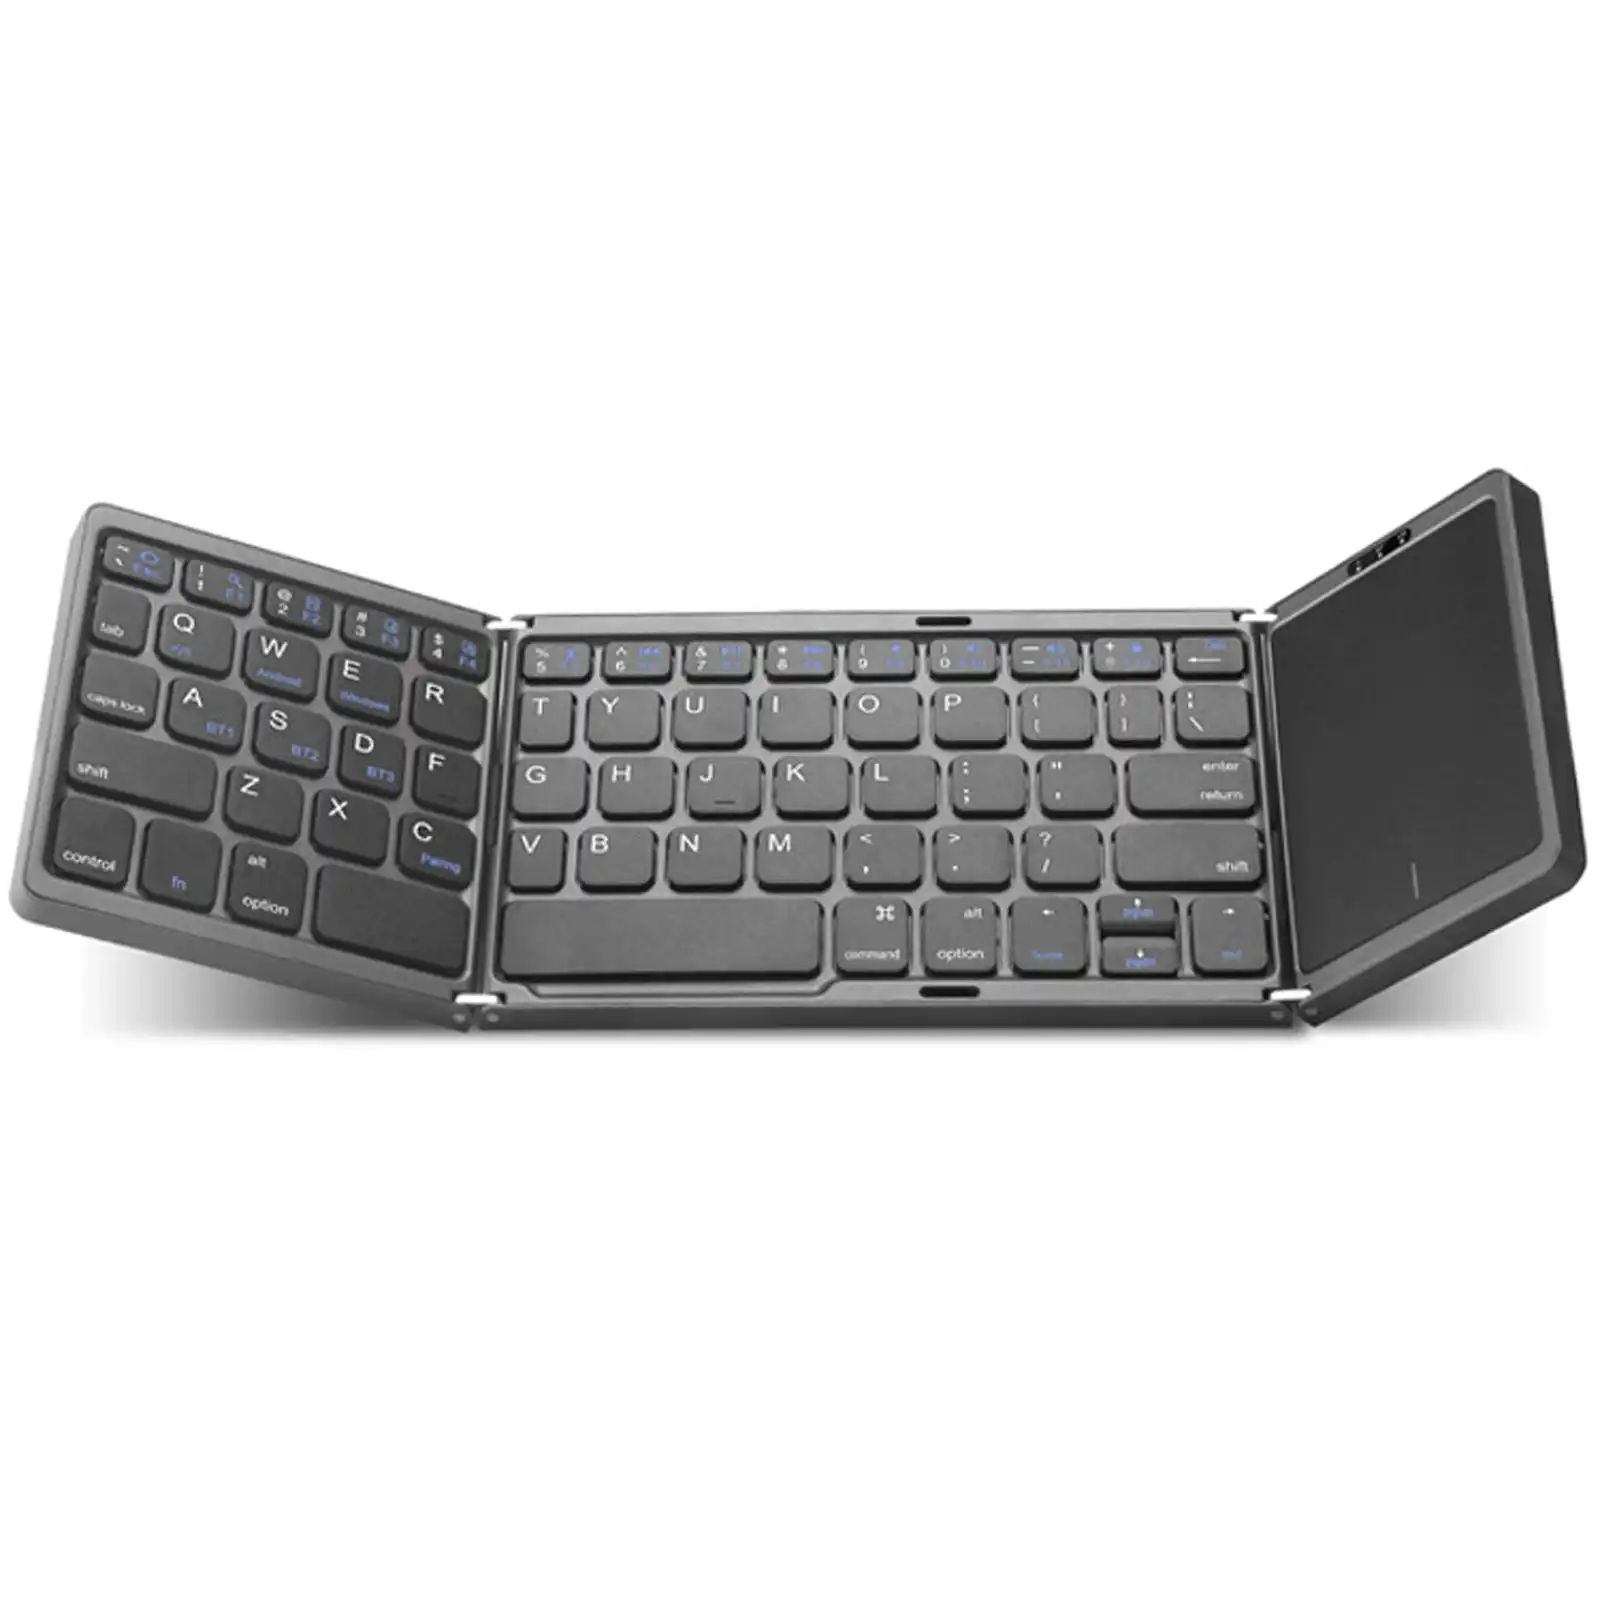 TODO Folding Bluetooth Wireless Keyboard Touchpad BT 5.1 Mac Windows Android - Black